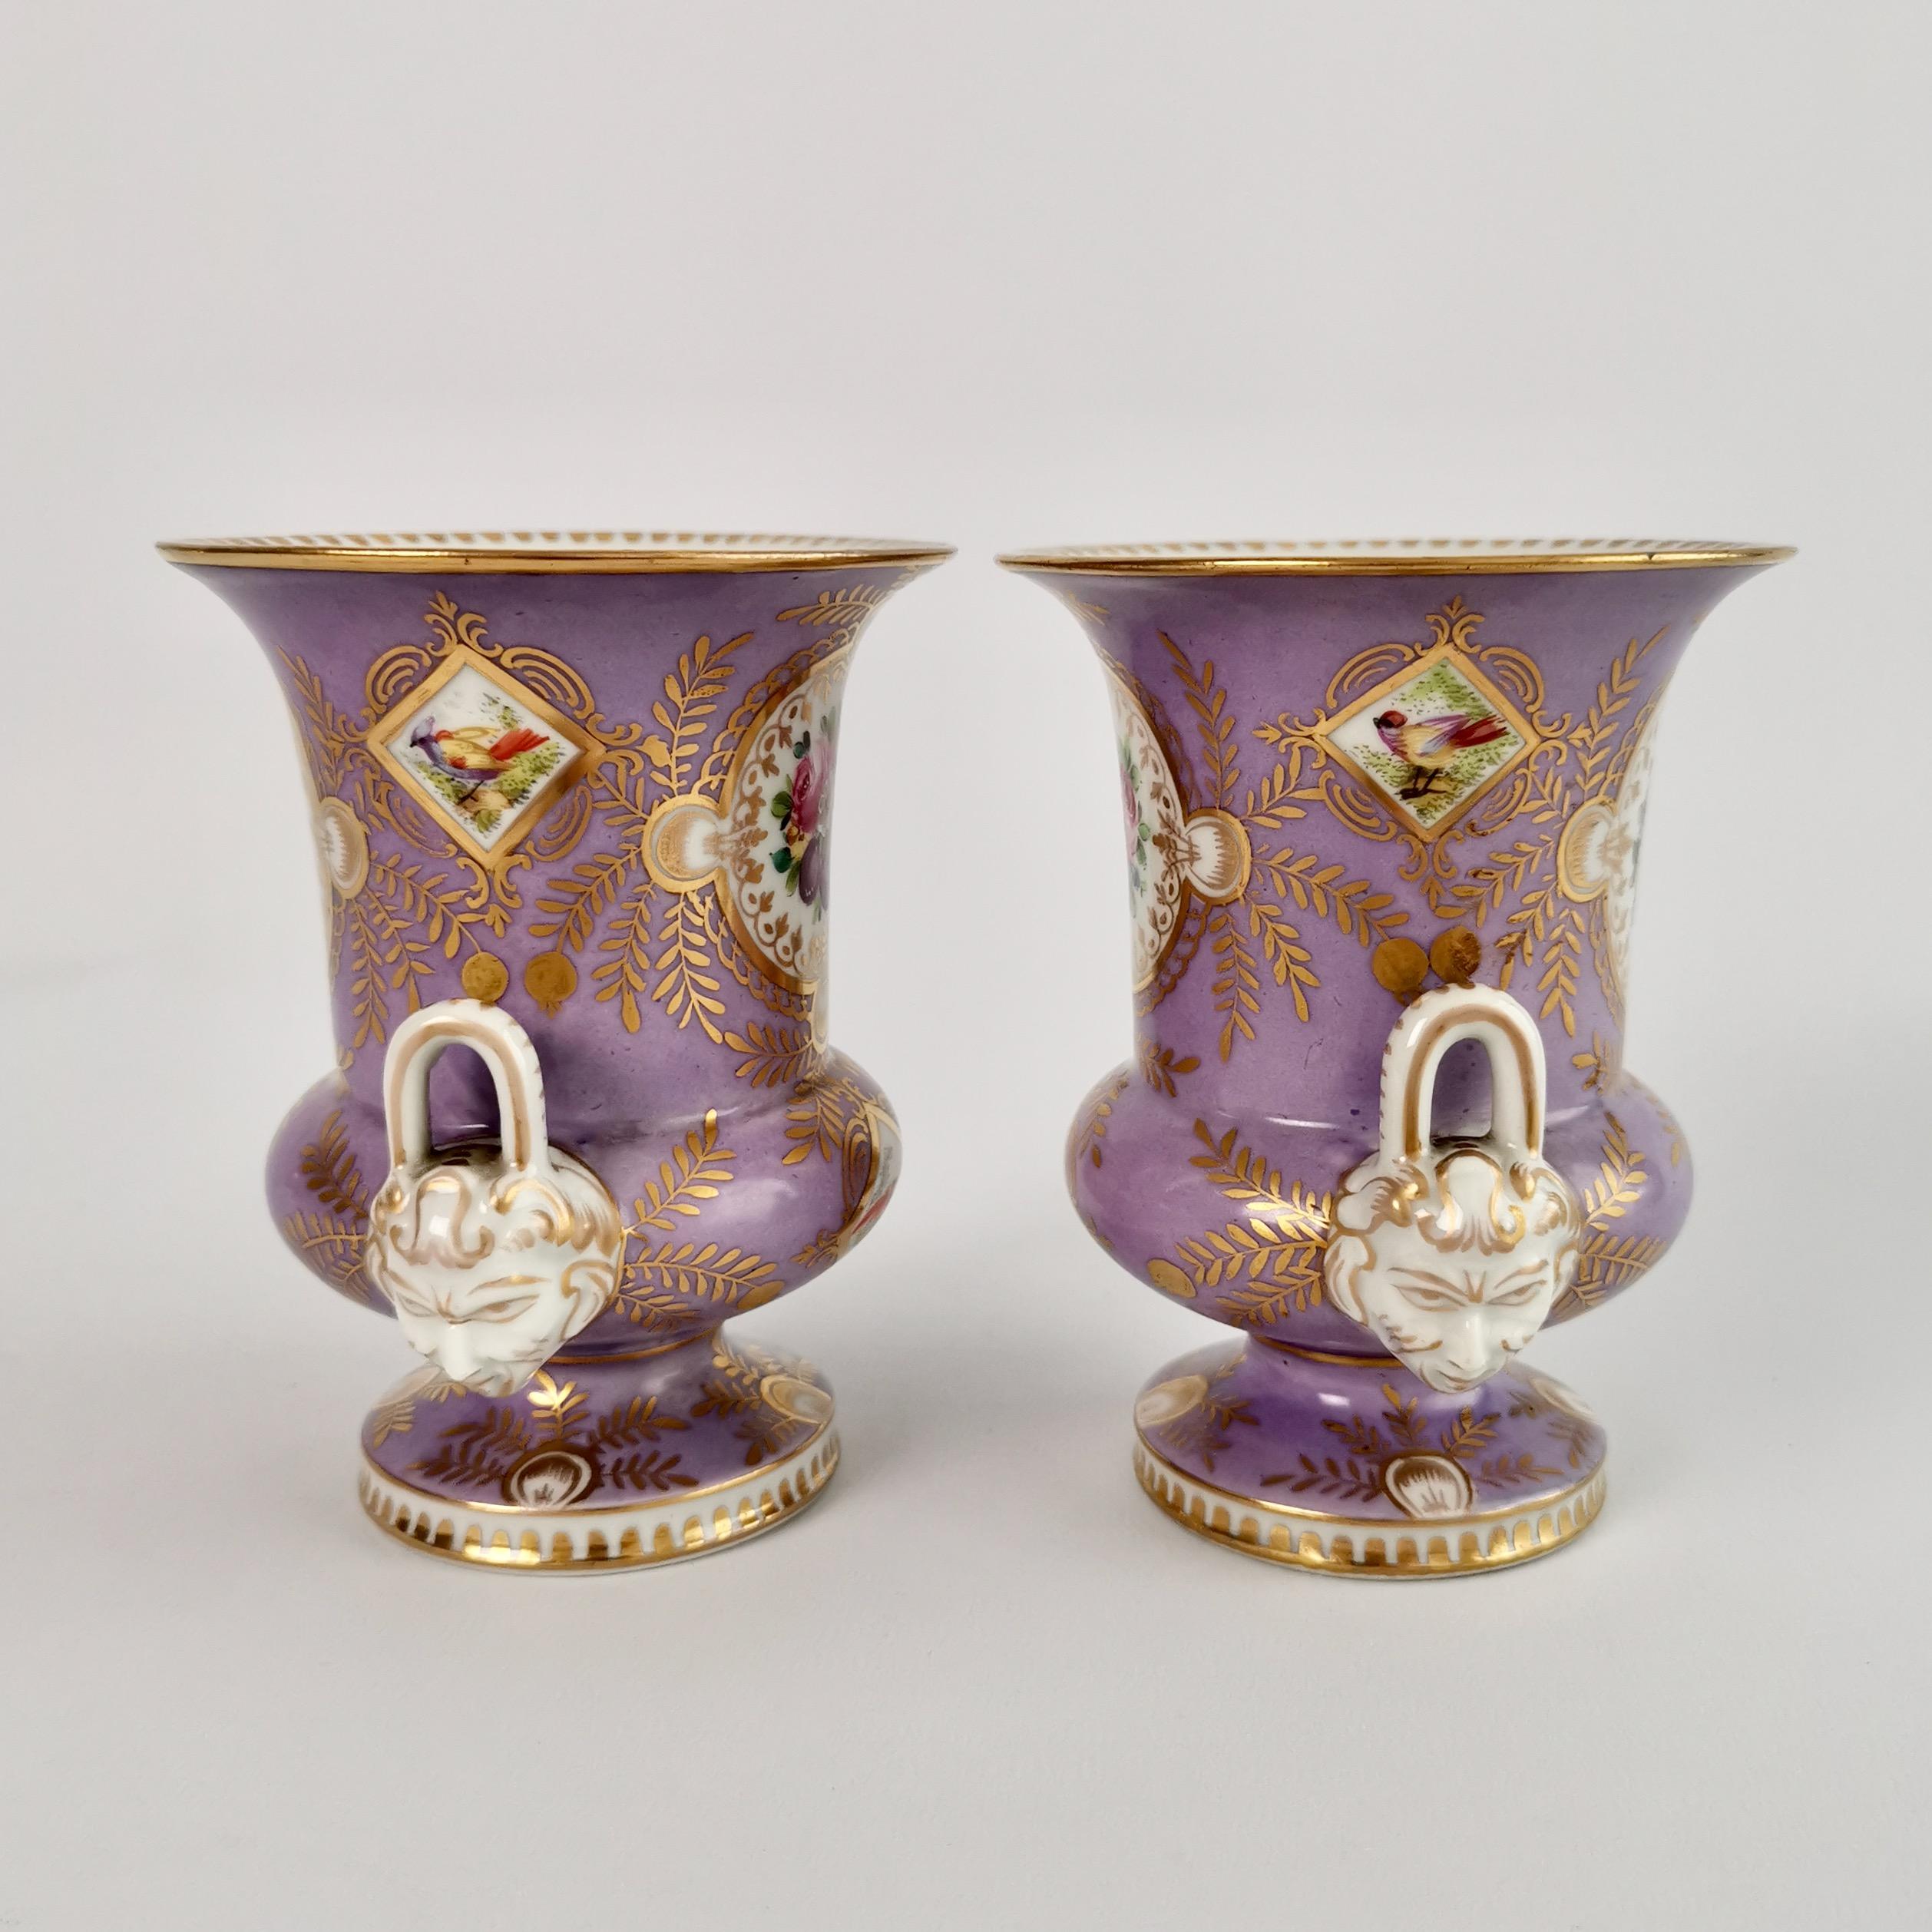 Campana-Vasen aus Porzellan, Edmé Samson zugeschrieben, Flieder, Vögel, Blumen, 19. Jahrhundert (Handbemalt)